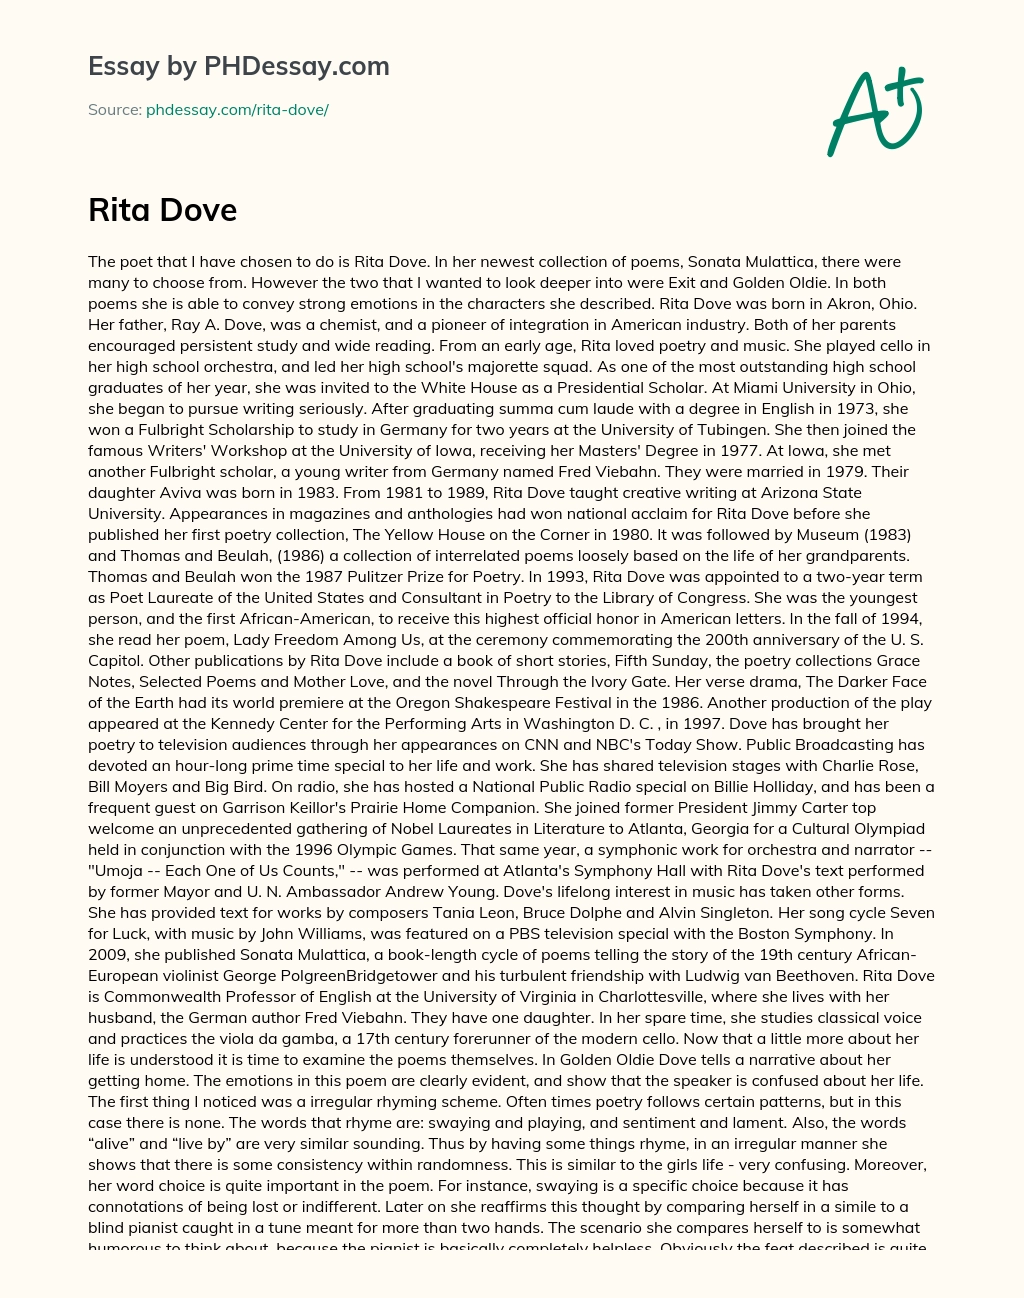 Rita Dove: A Poet’s Life and Work essay